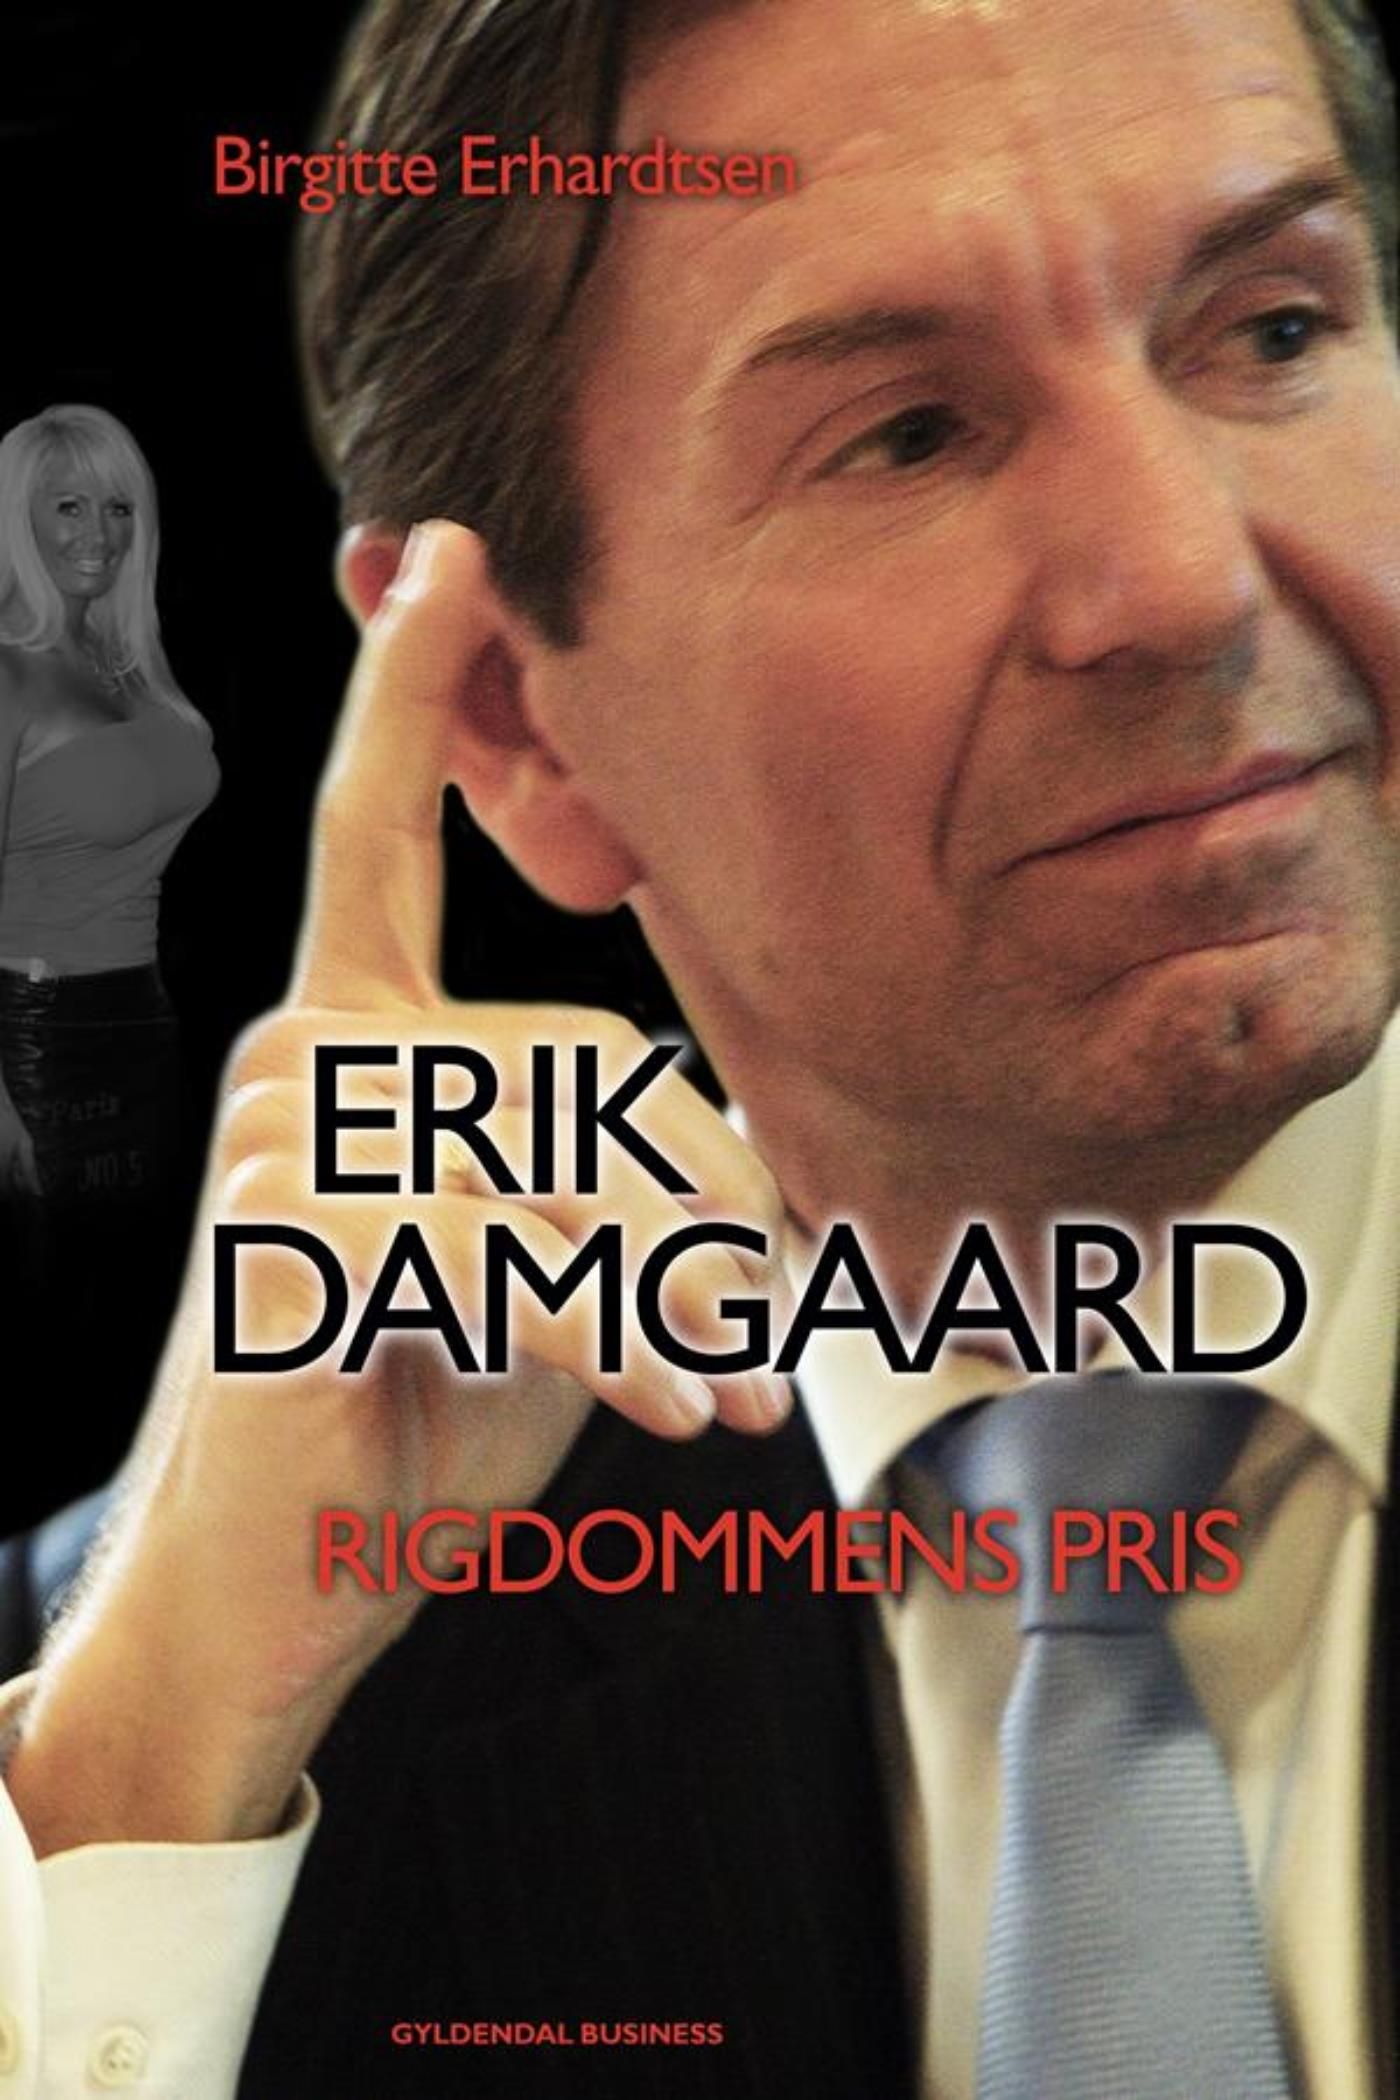 Erik Damgaard, eBook by Birgitte Erhardtsen